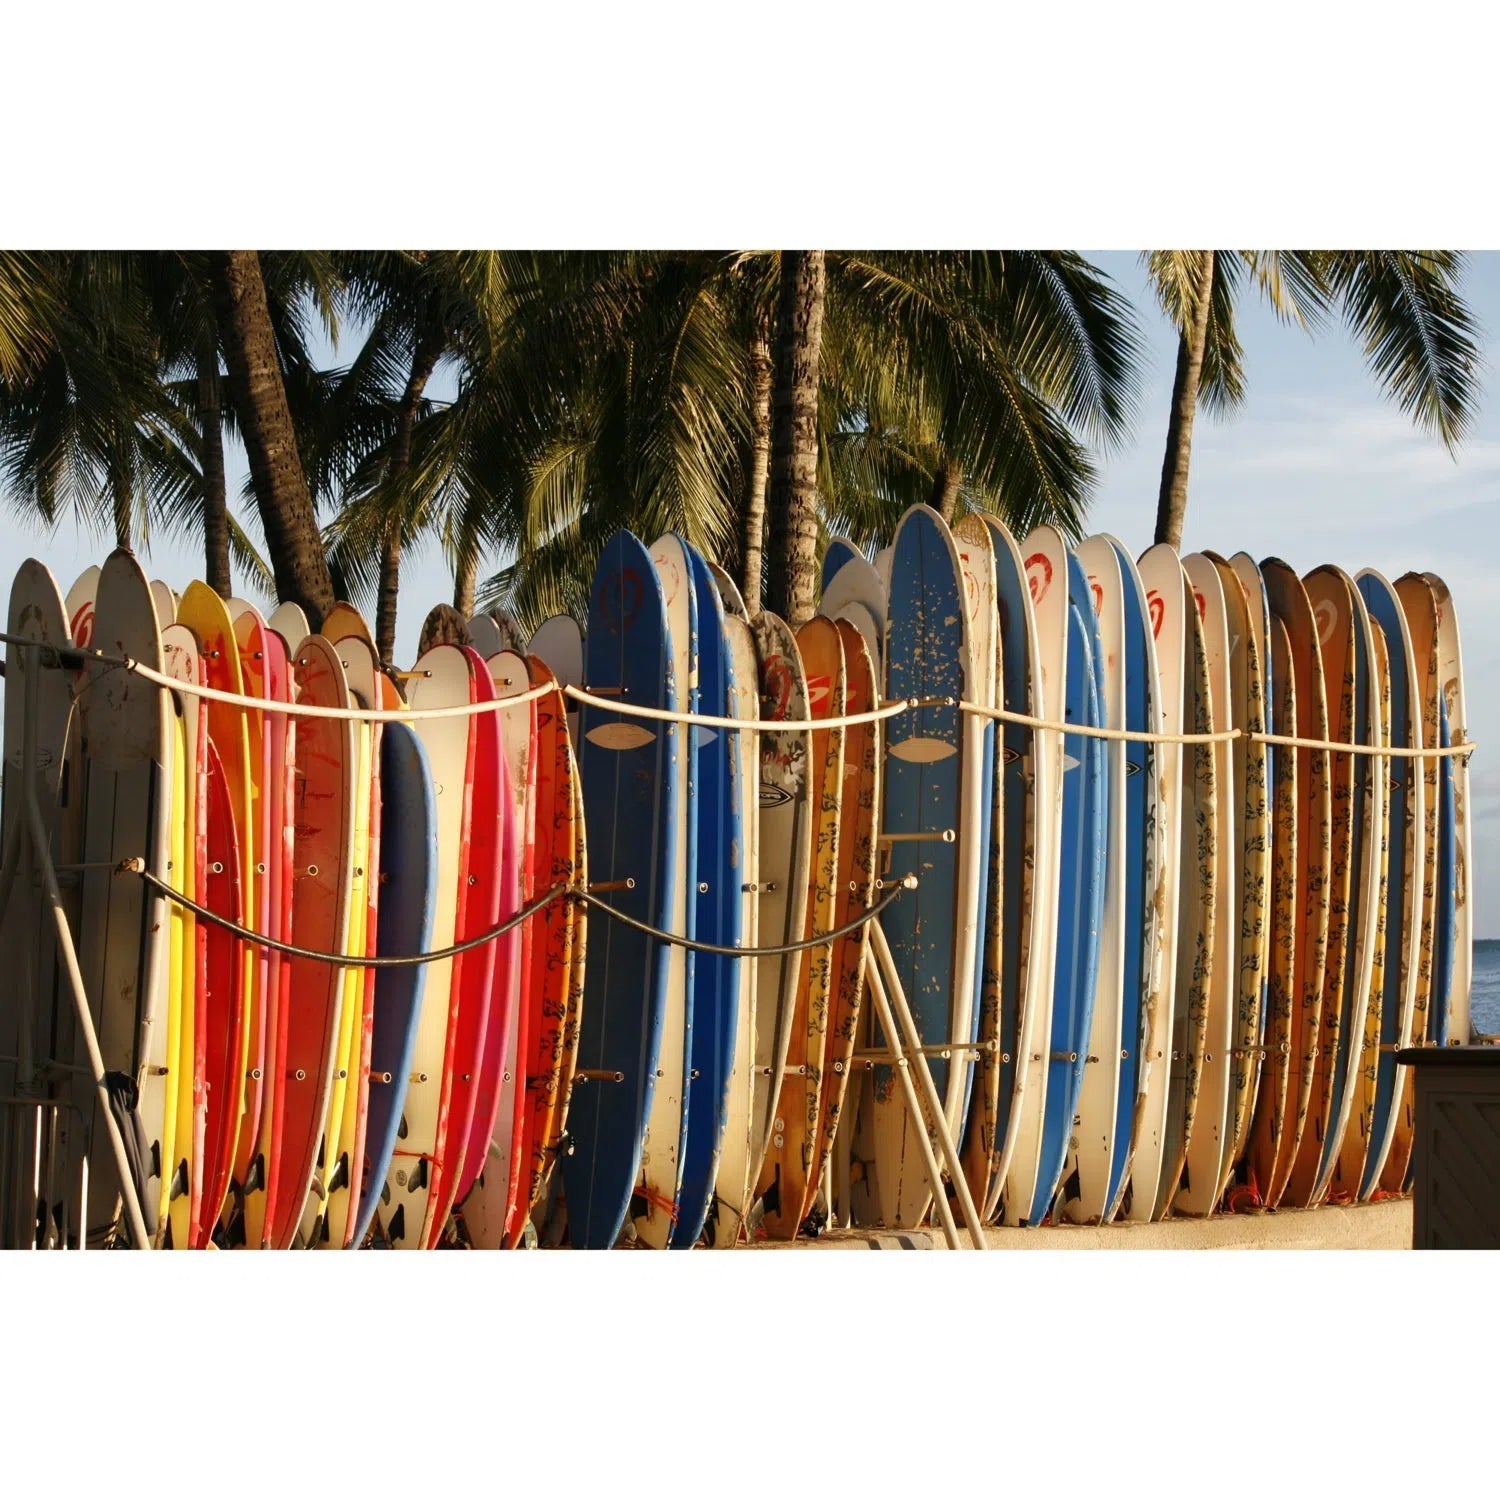 Planches de surf à Hawaï-Imagesdartistes